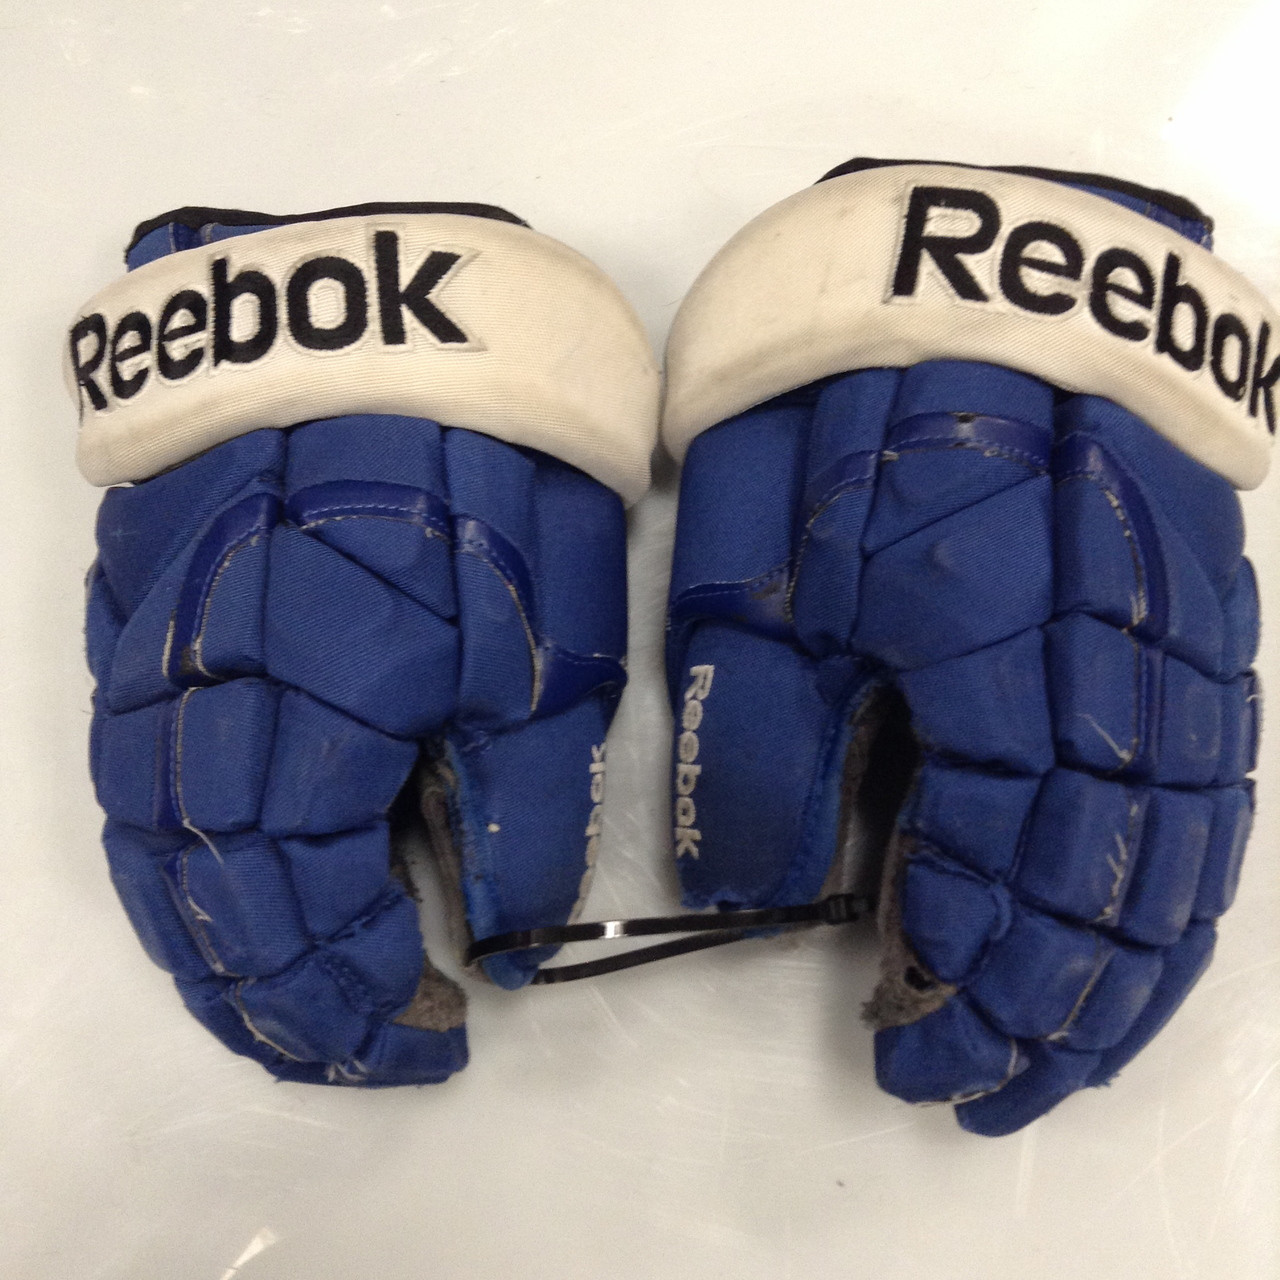 Reebok 11KP Pro Stock Custom Hockey Gloves 13" Syracuse Crunch AHL used #63  - DK's Hockey Shop